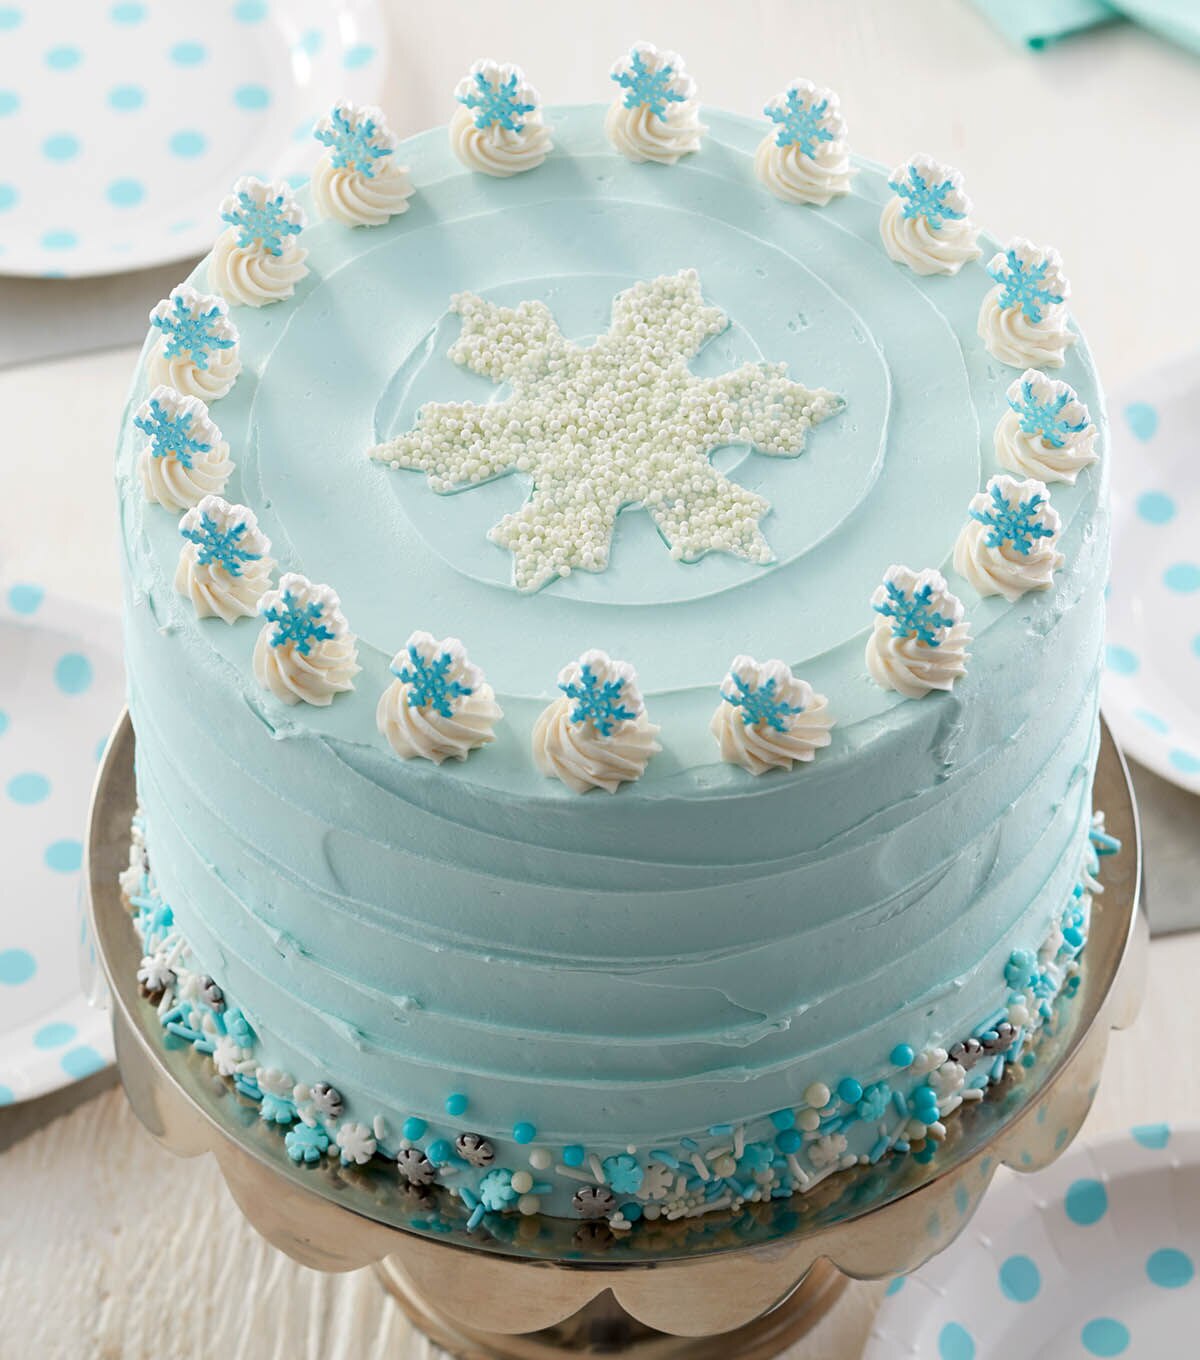 Recipes - Winter Wonderland Cake